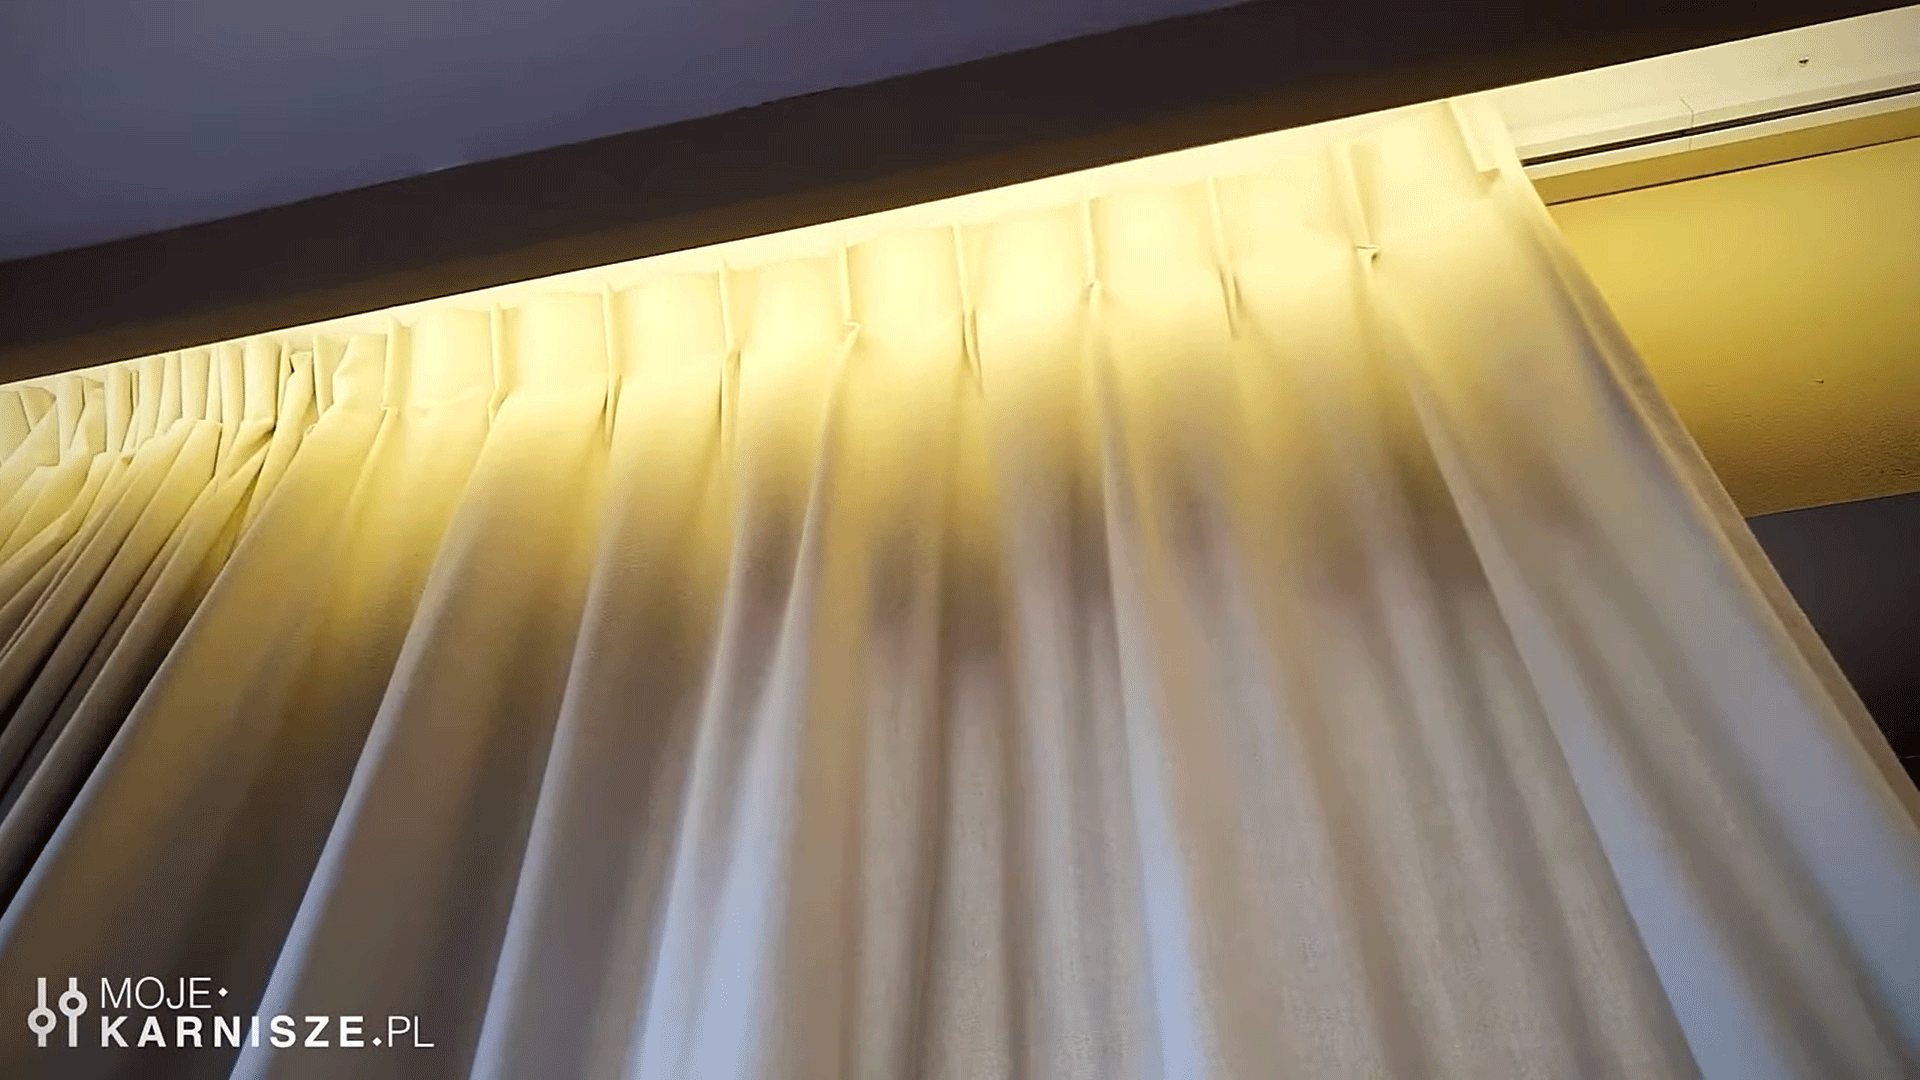 handling KNALL electric curtain rod